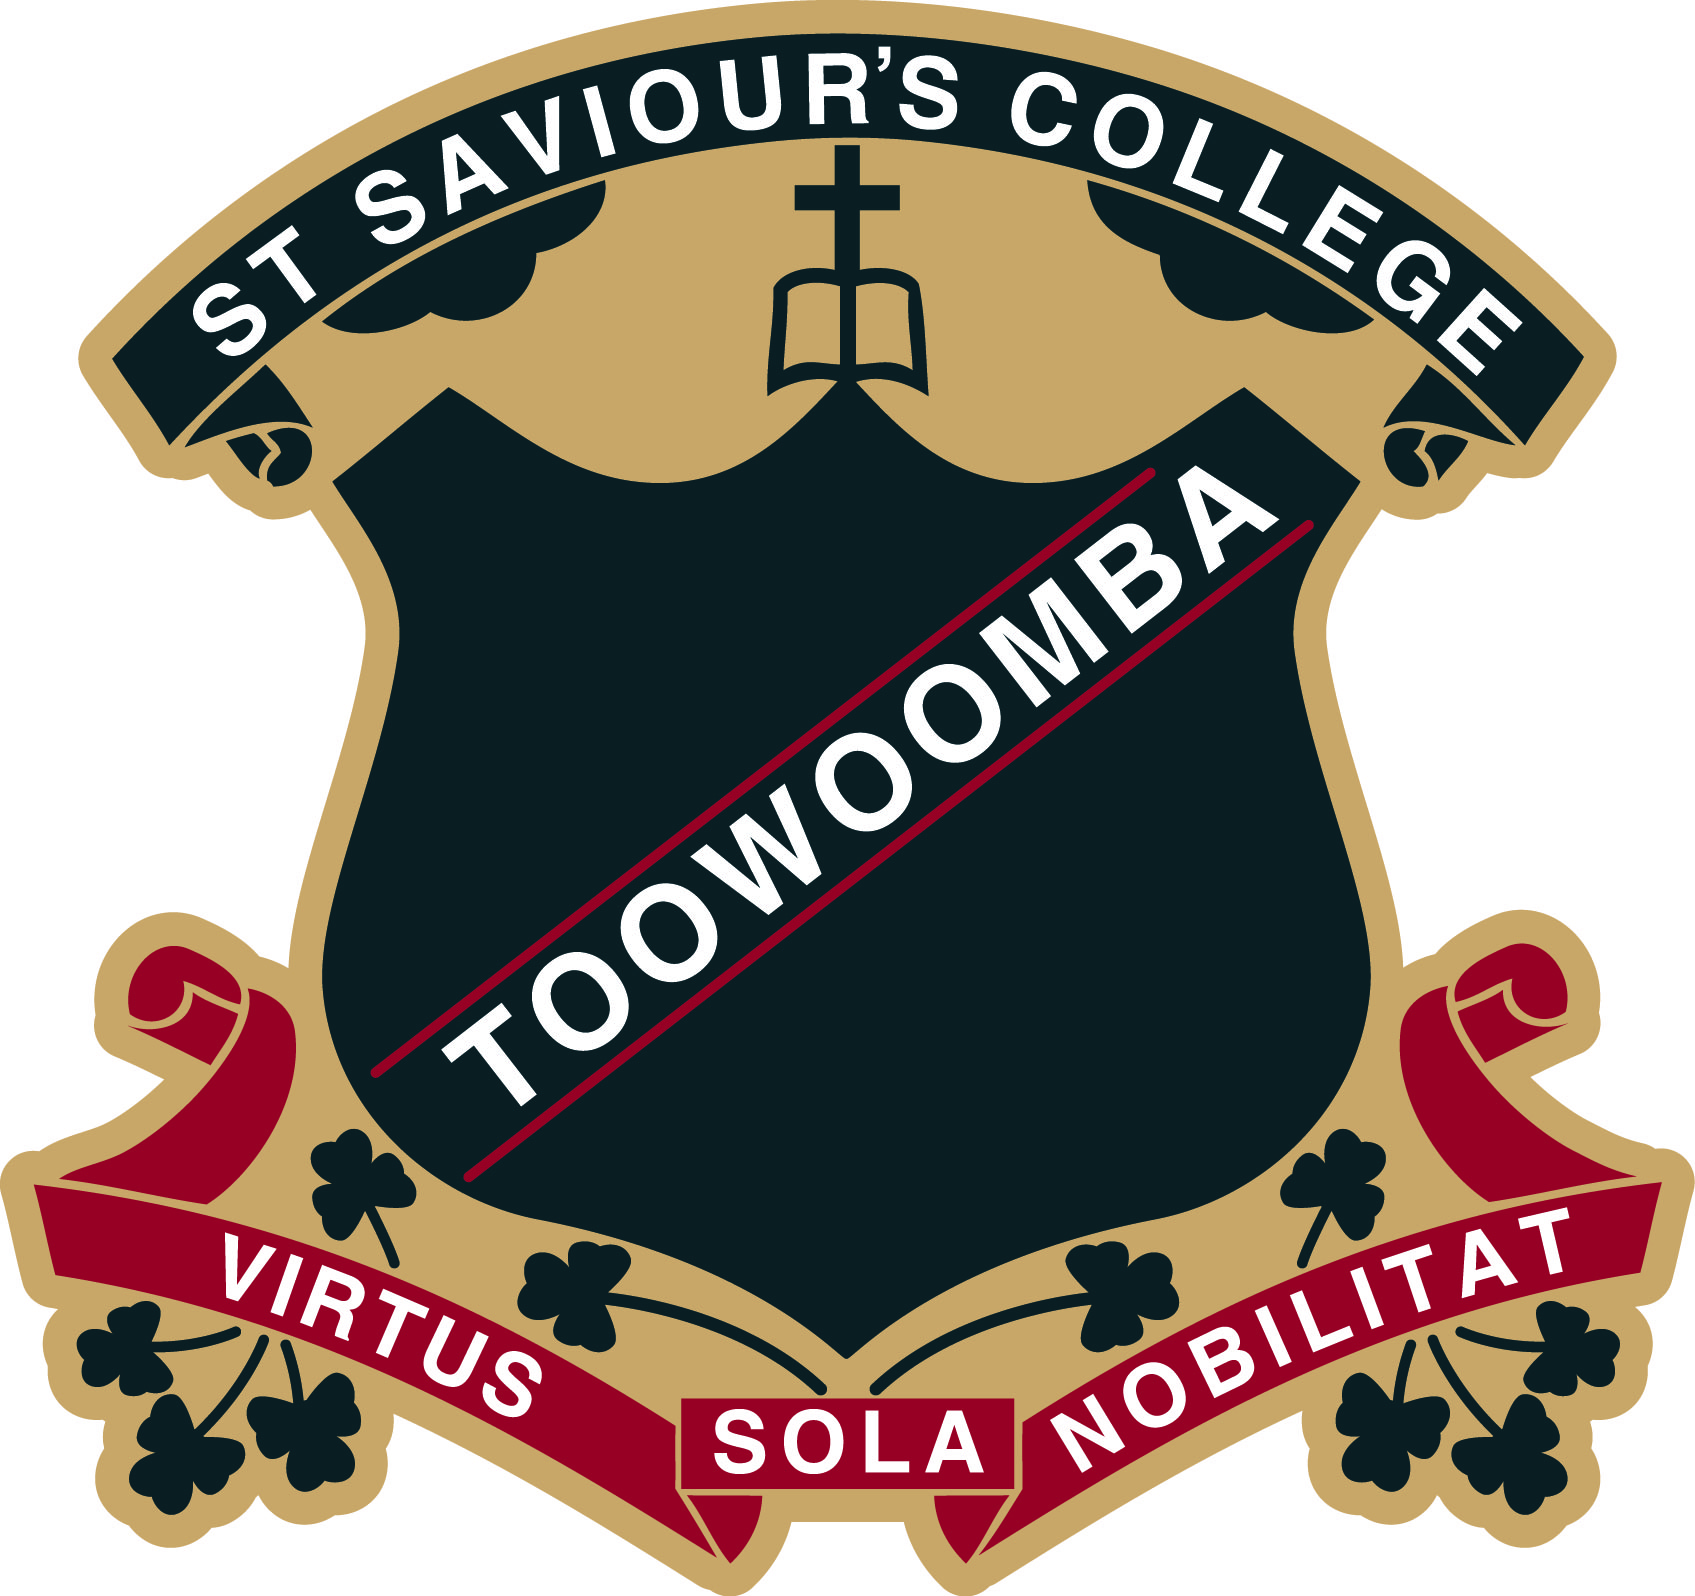 St Saviours College校徽